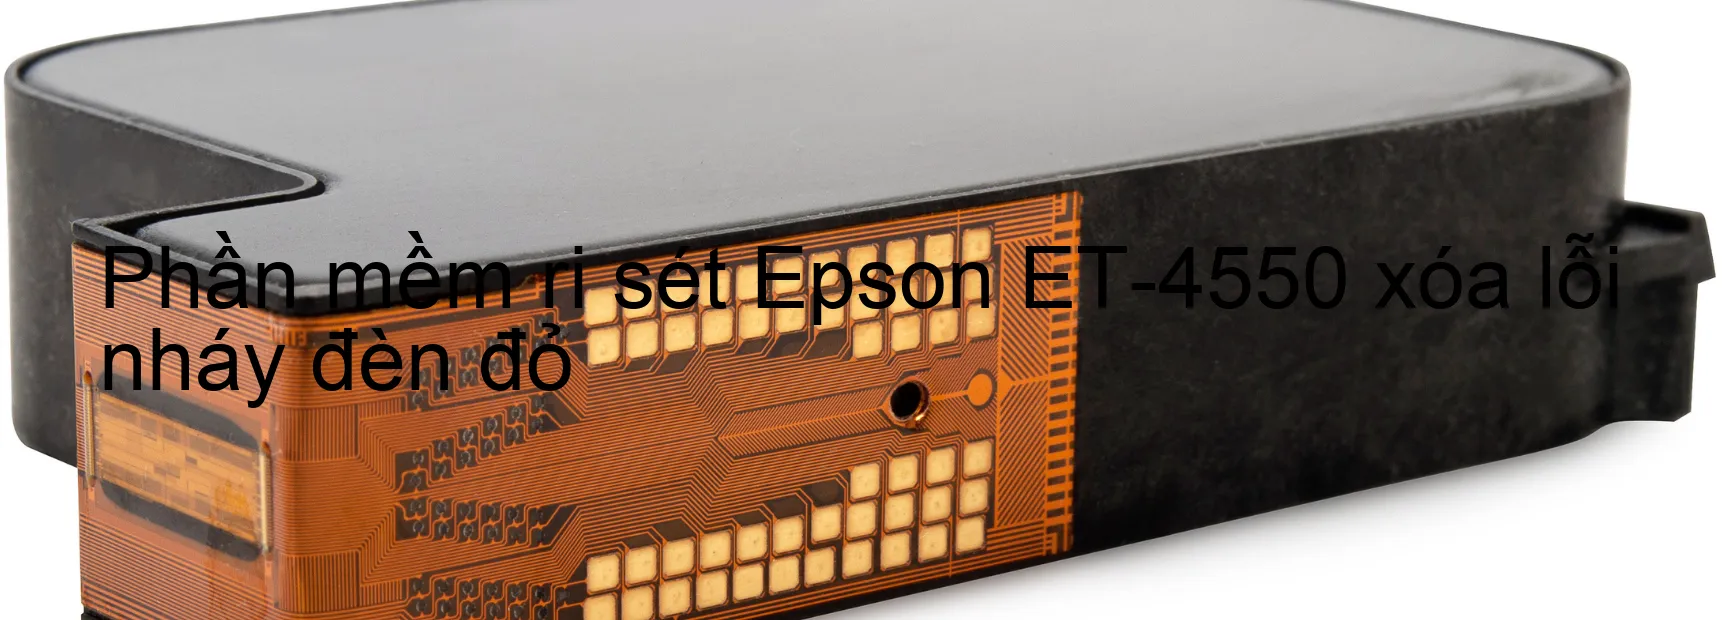 Phần mềm reset Epson ET-4550 xóa lỗi nháy đèn đỏ